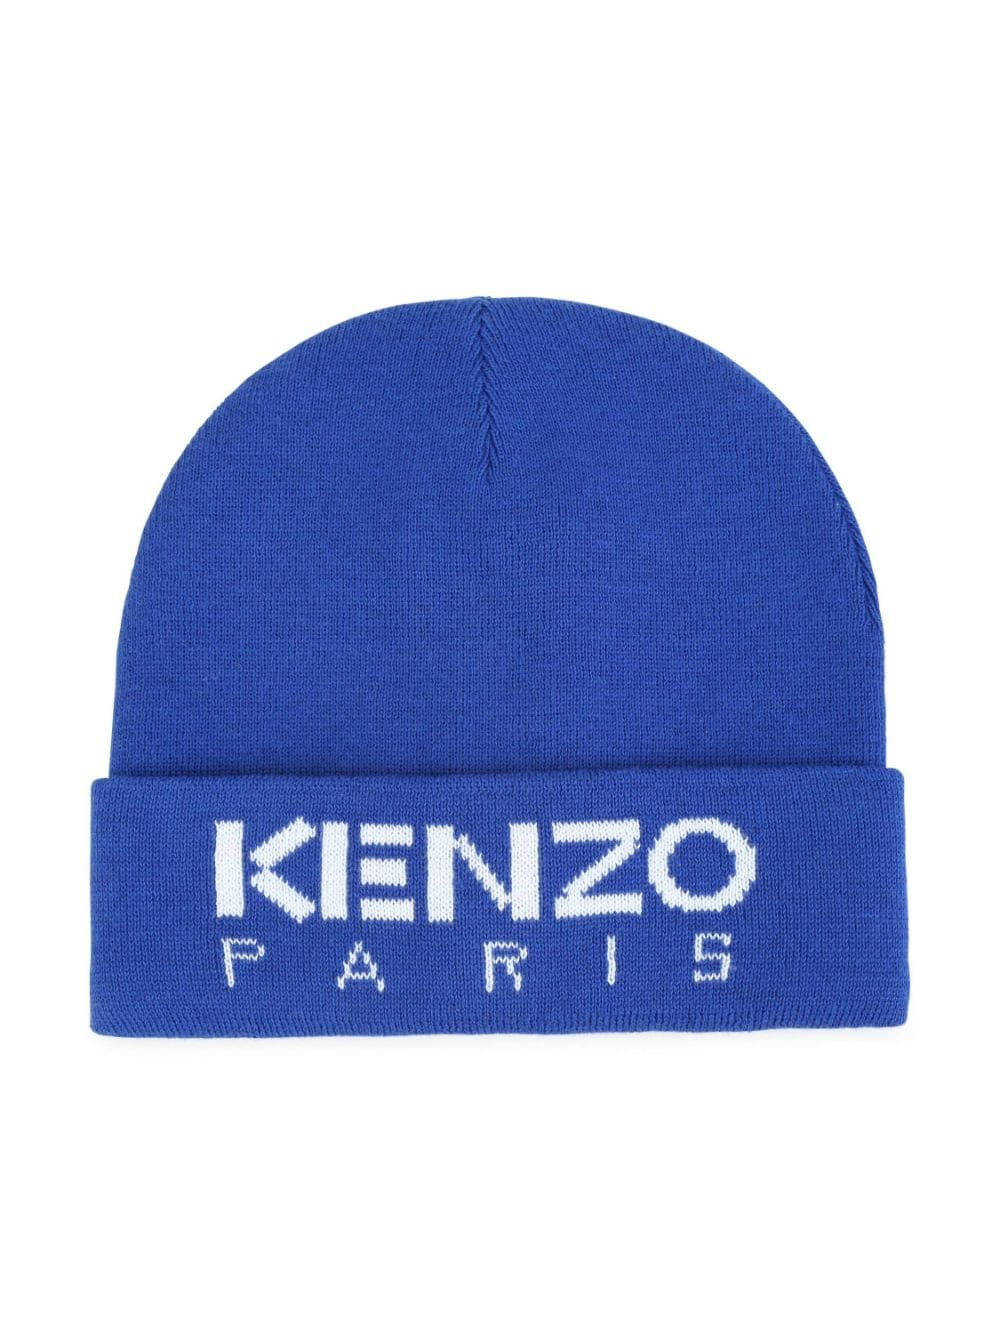 Kenzo Kids Royal Blue Knitted Beanie Hat